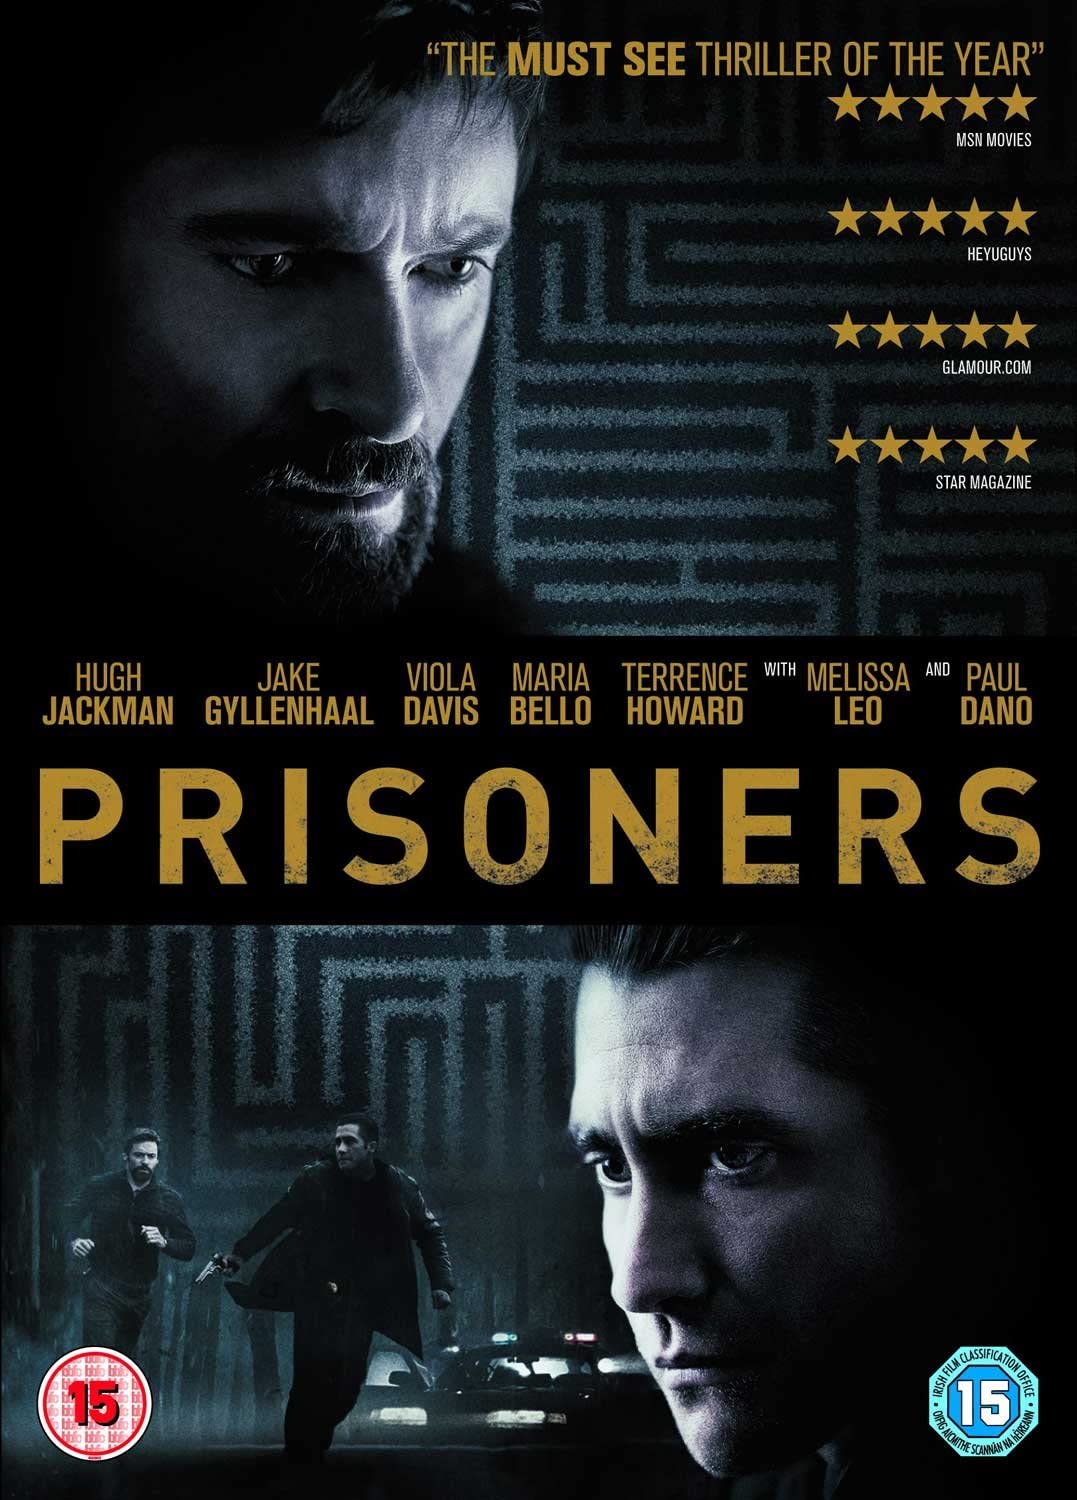 Prisoners - Thriller (2013) [DVD]